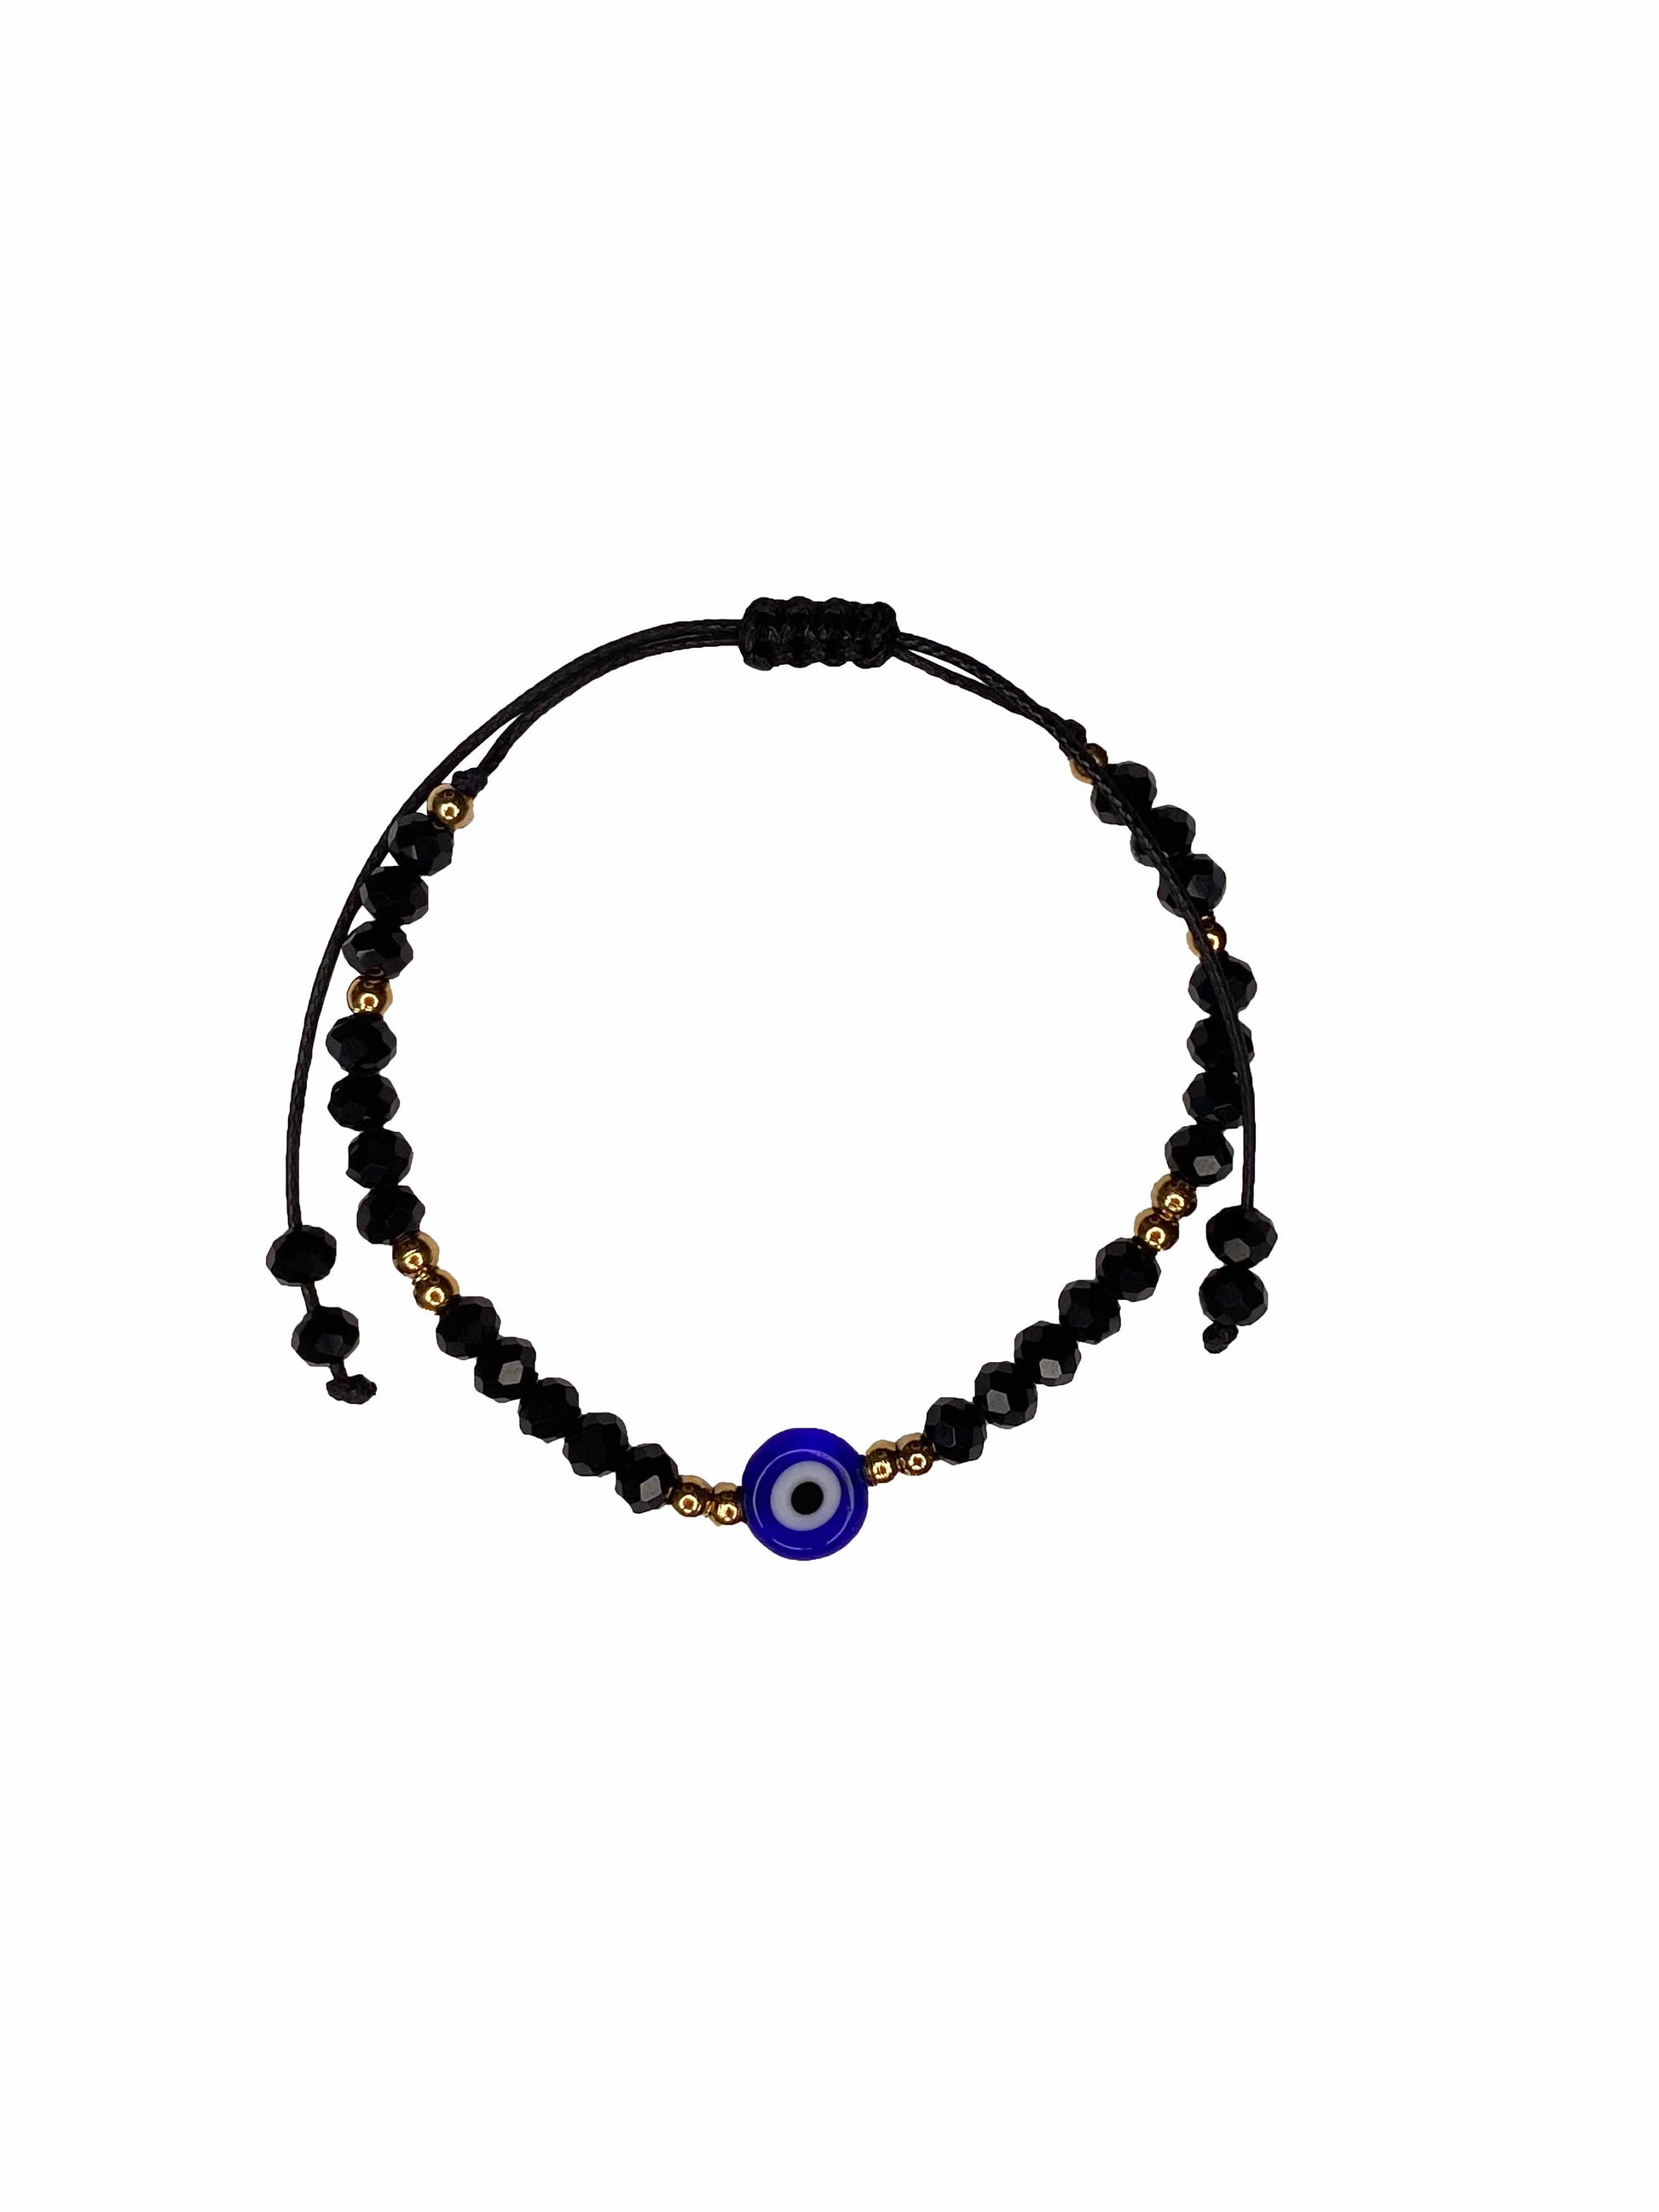 Handmade black crystal beaded nazar amulet bracelet with sliding knot ties.